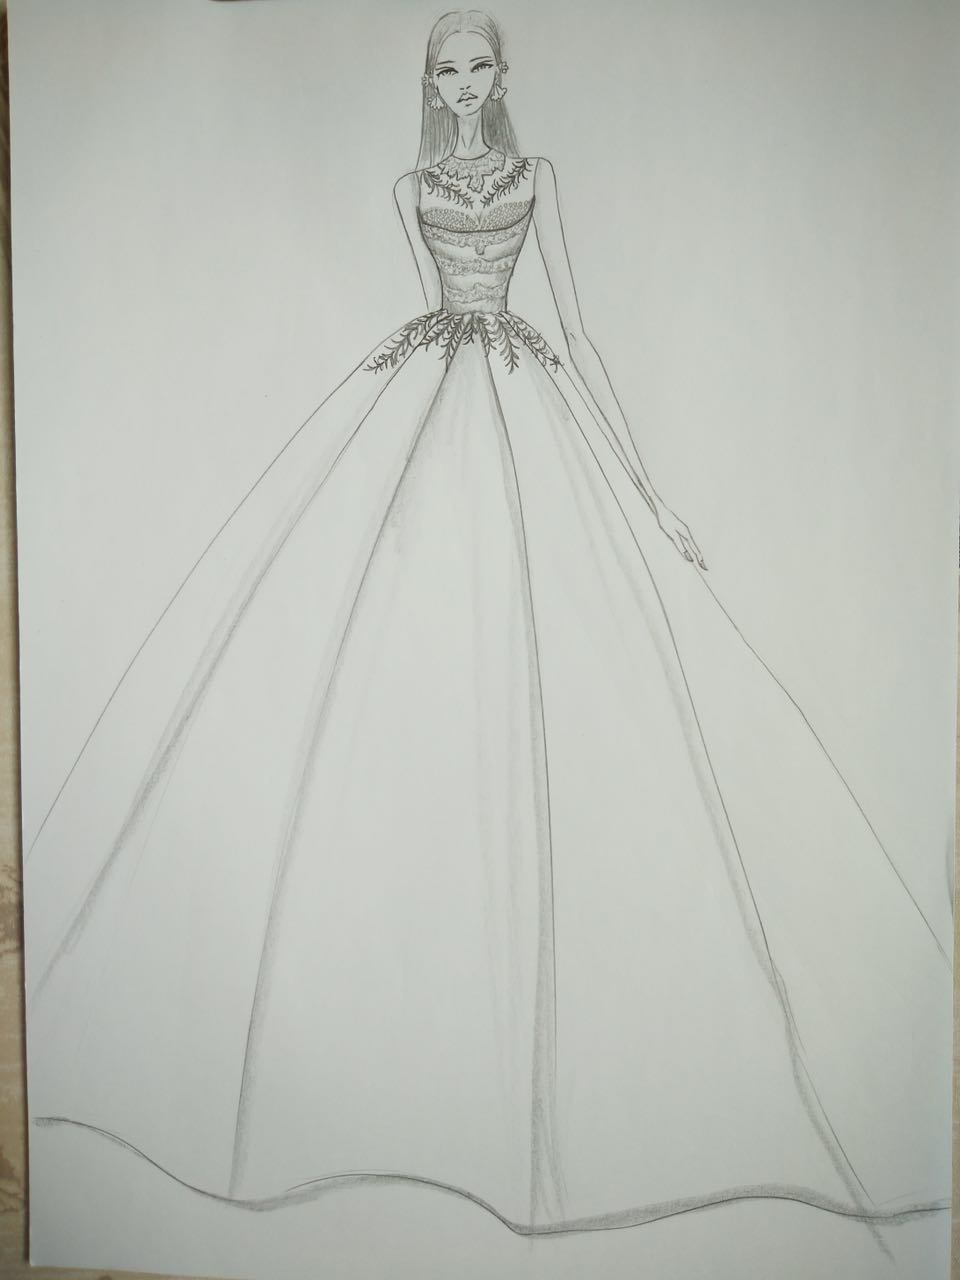 Strapless Applique Lace Prom Wedding Dress